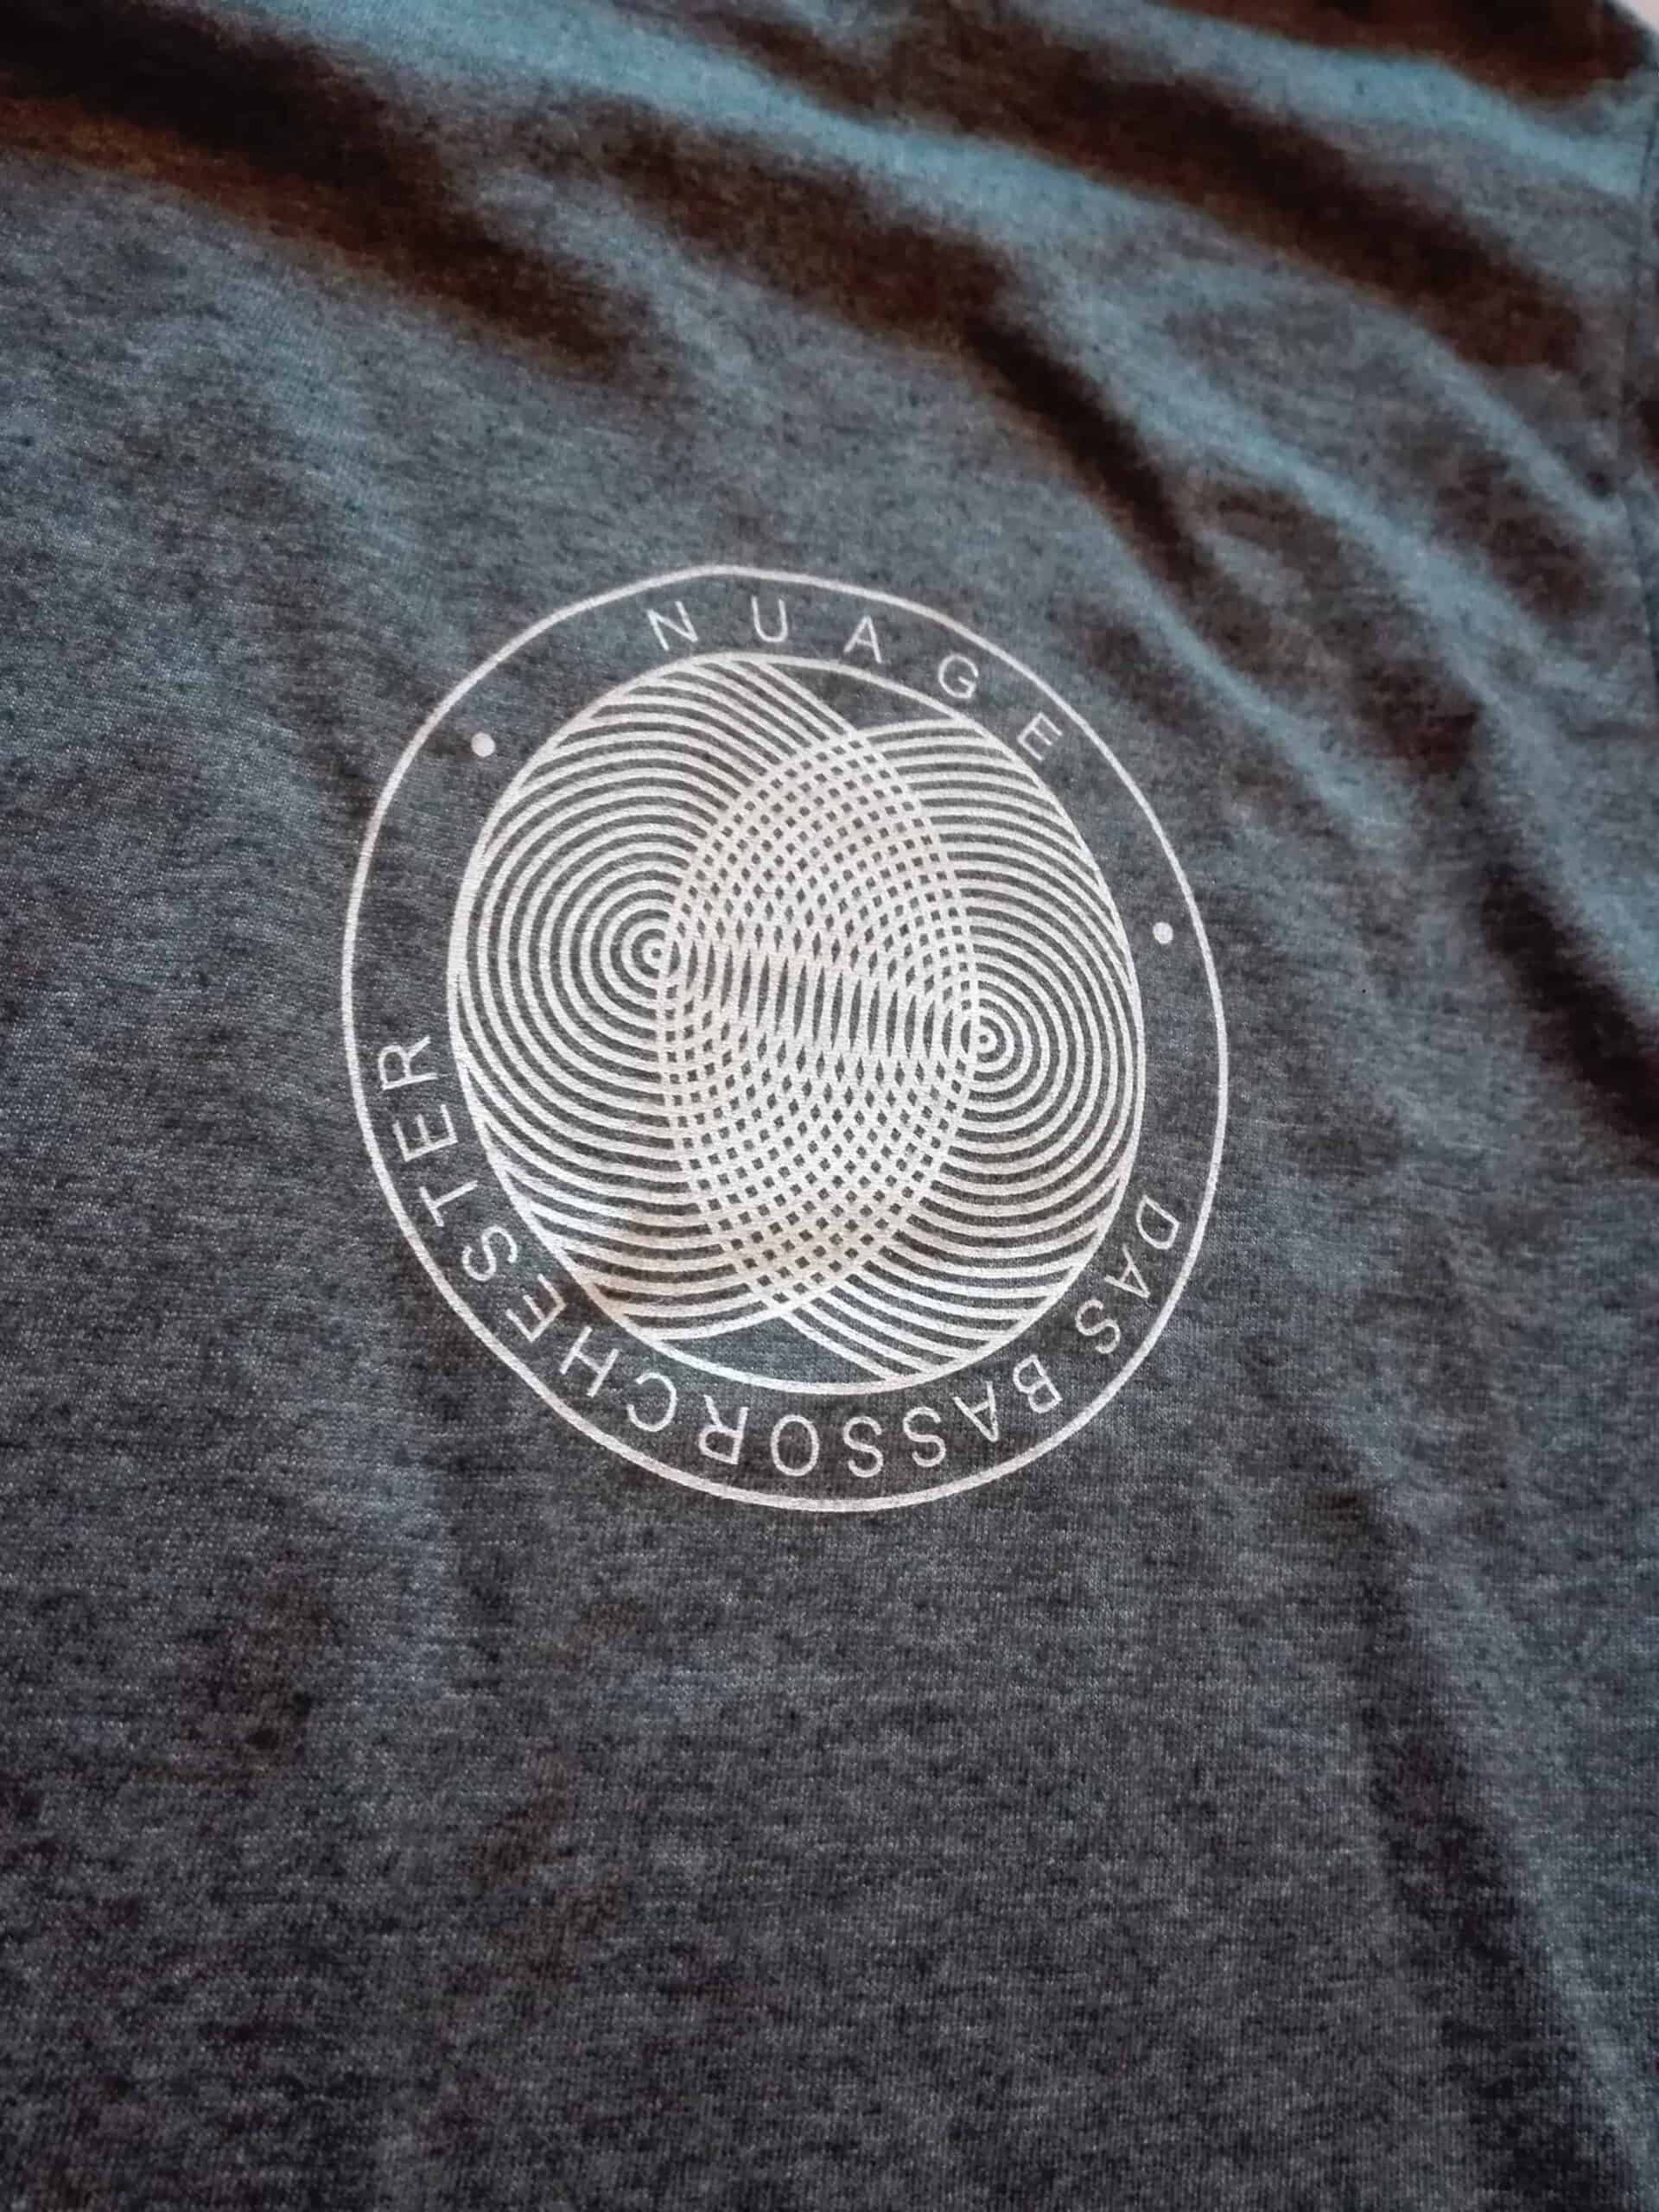 Nuage & das Bassorchester - Logo Shirt Exclusive TCM shirt! 20 copies printed